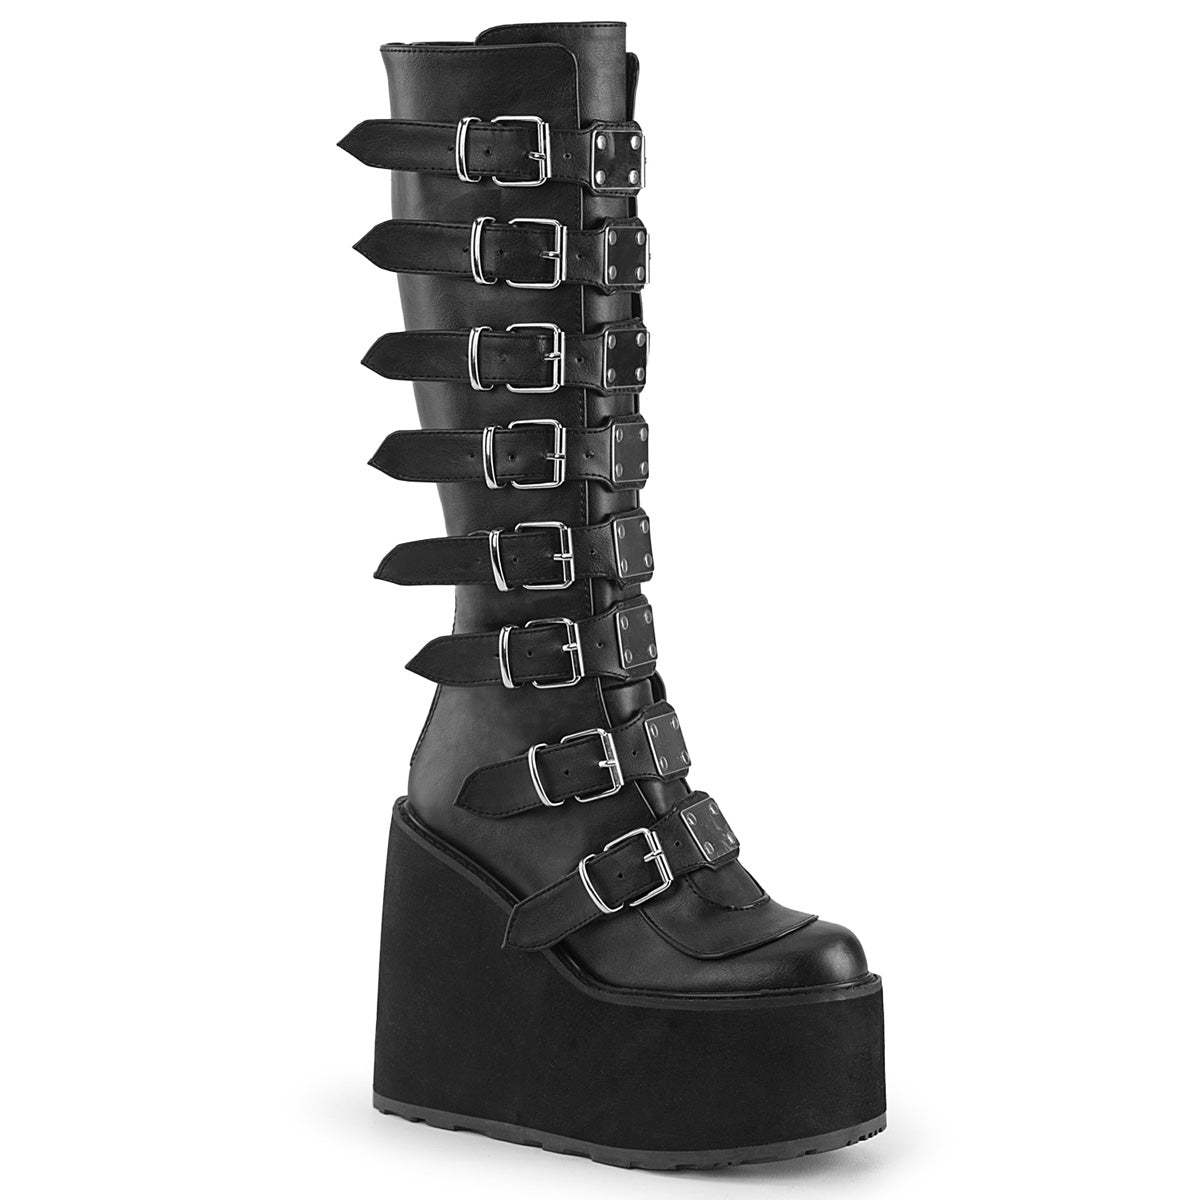 SWING-815 Alternative Footwear Demonia Women's Mid-Calf & Knee High Boots Blk Vegan Leather